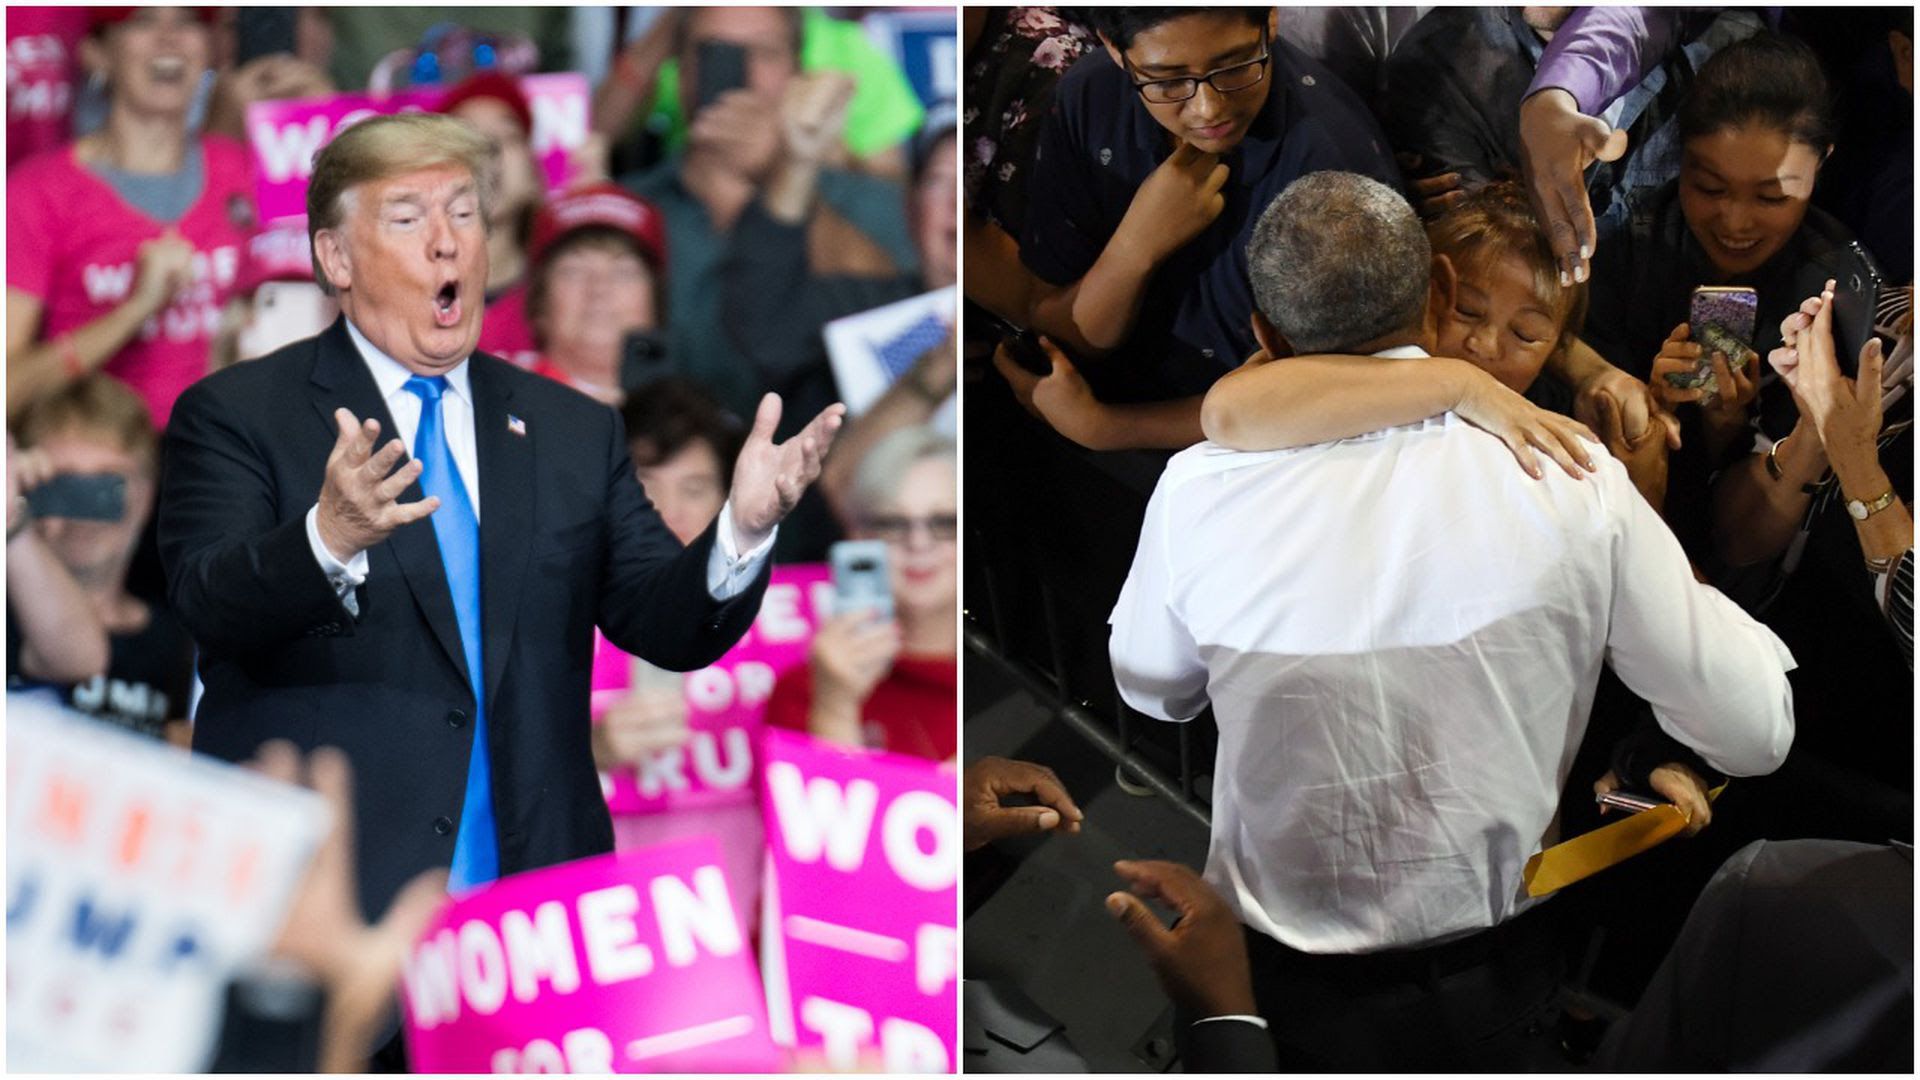 Trump speaking to crowd, Obama hugging fan